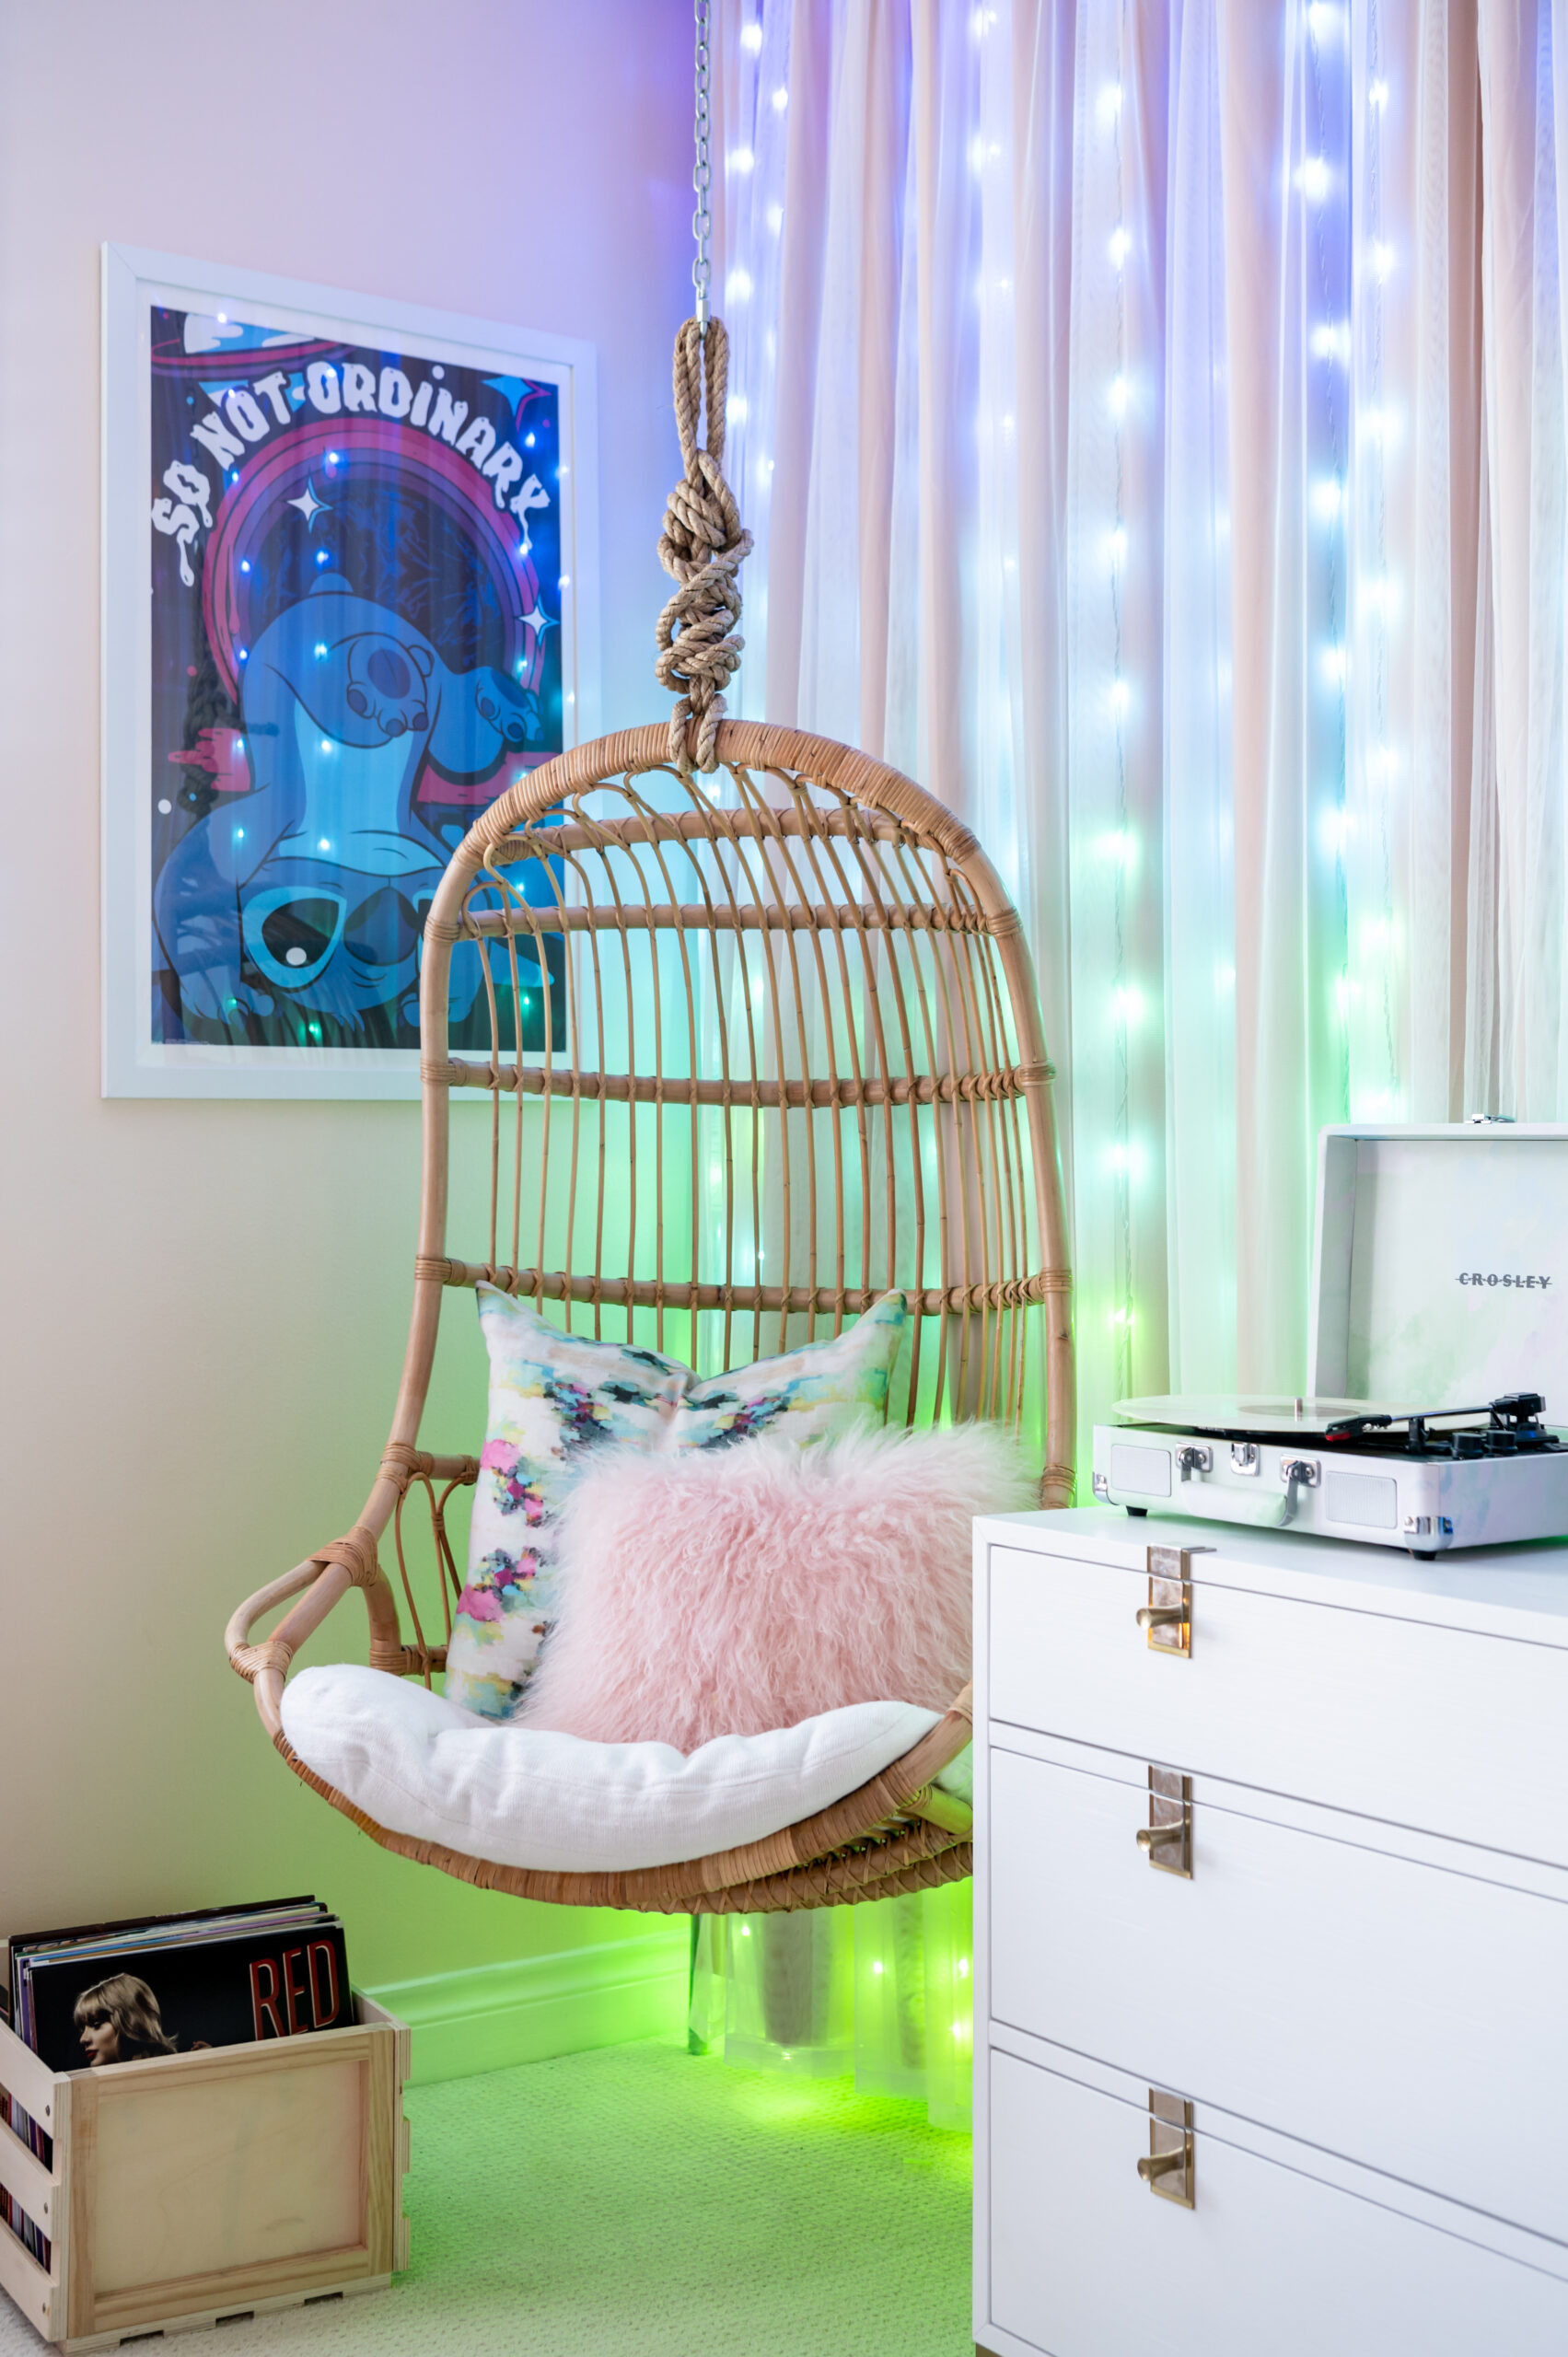 Teenage bedroom interior design with lights and cartoon poster